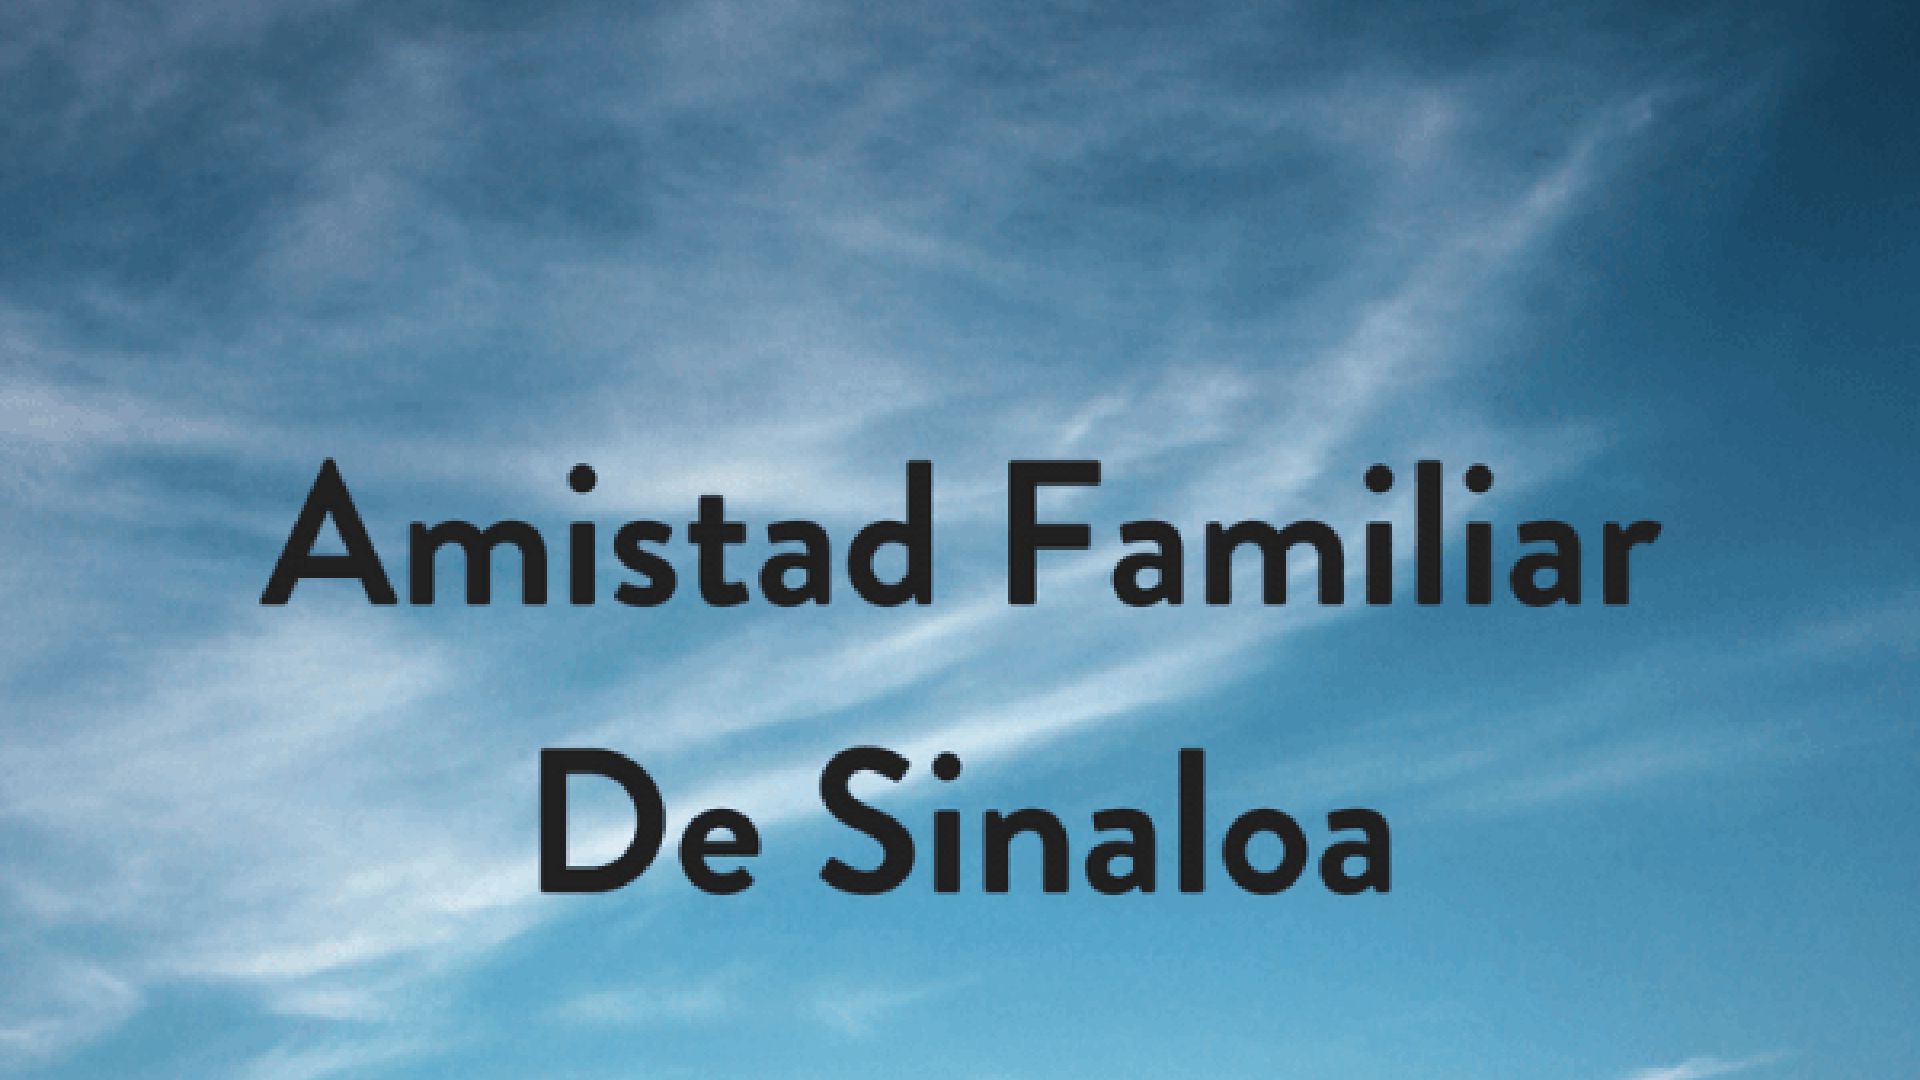 Amistad Familiar De Sinaloa logo